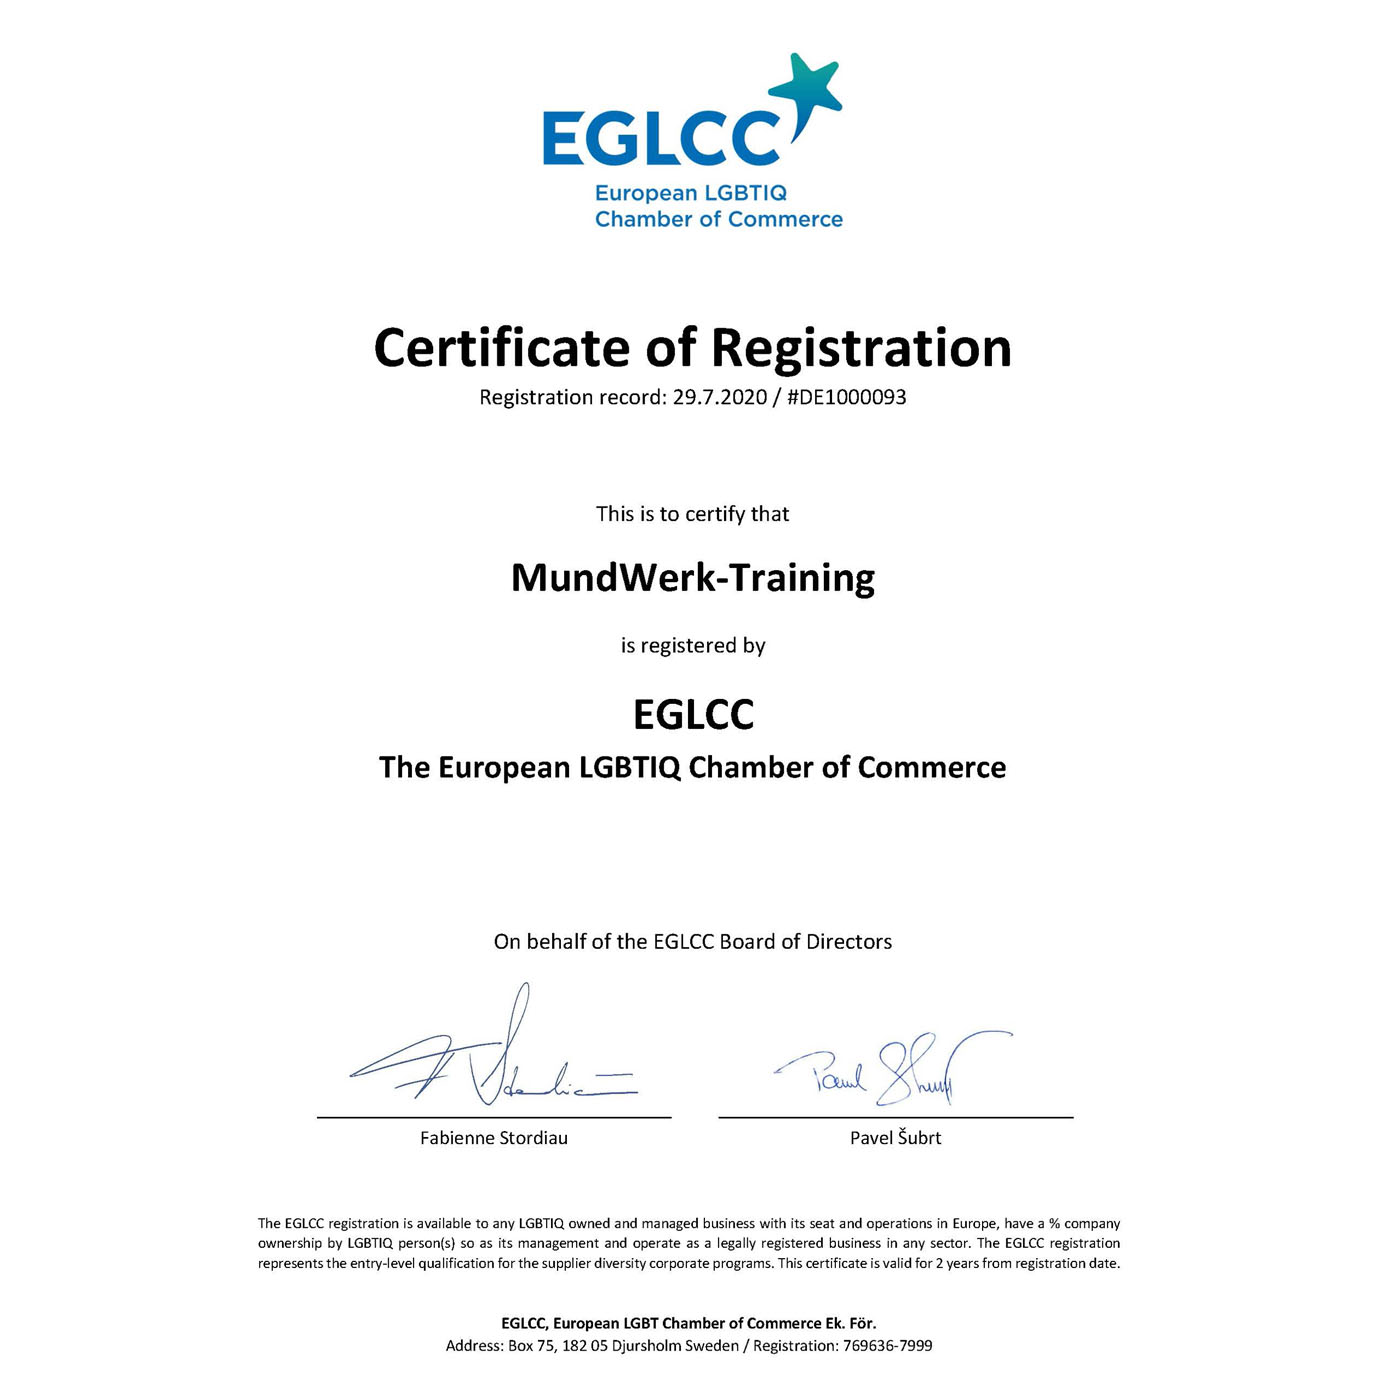 EGLCC Registration Certificate DE1000093 MundWerk-Training